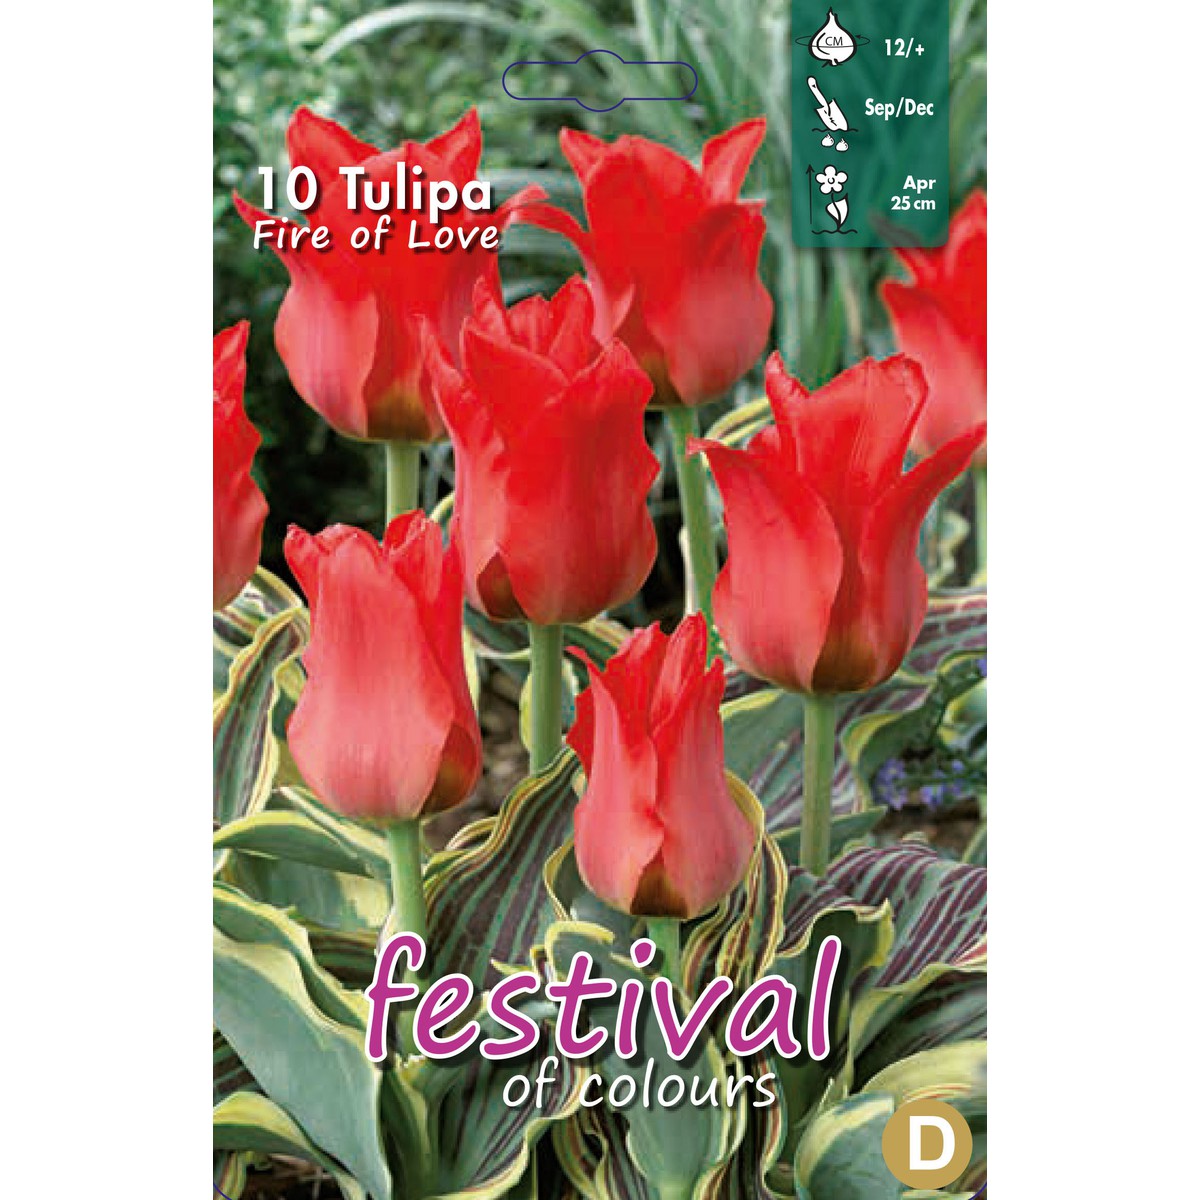   Tulipes greigii 'Fire of Love'  10 pcs 12/